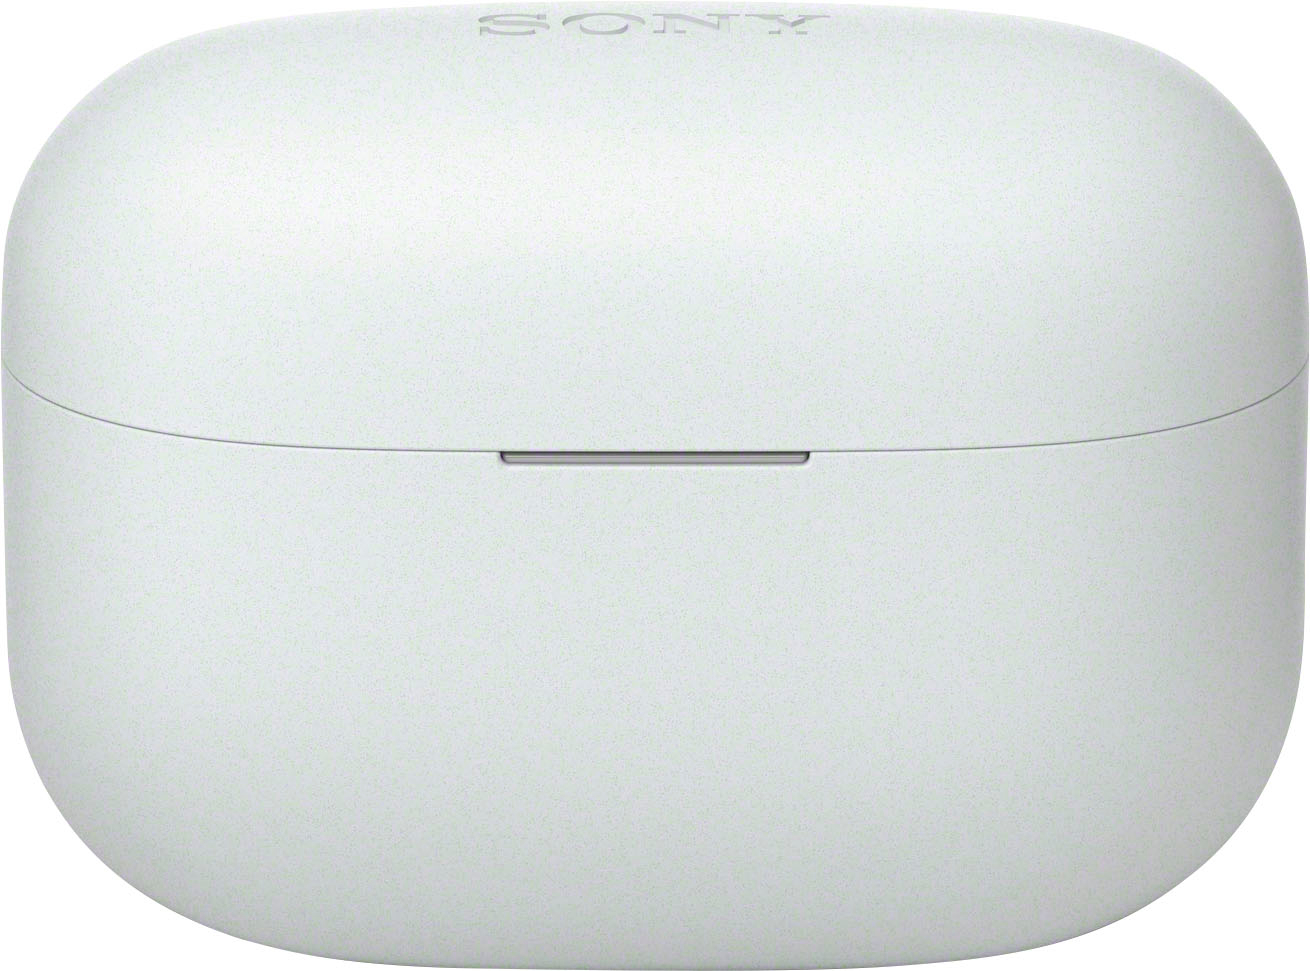 Sony LinkBuds S True Wireless Noise Canceling Earbuds White WFLS900N/W -  Best Buy